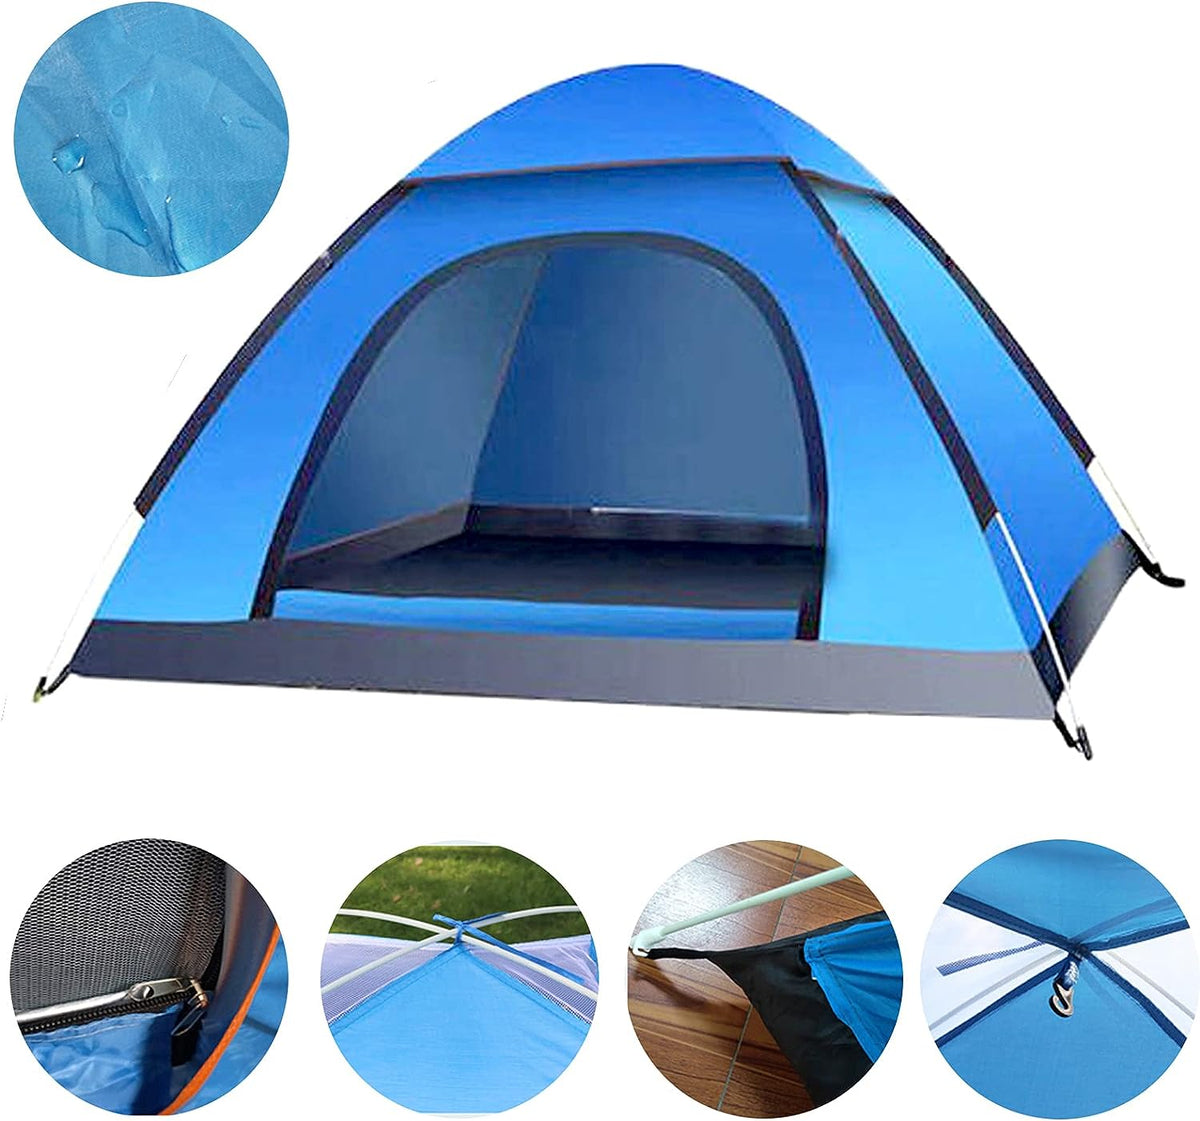 Cort camping cu deschidere automata pop-up, impermeabil, protectie UV, 2 usi